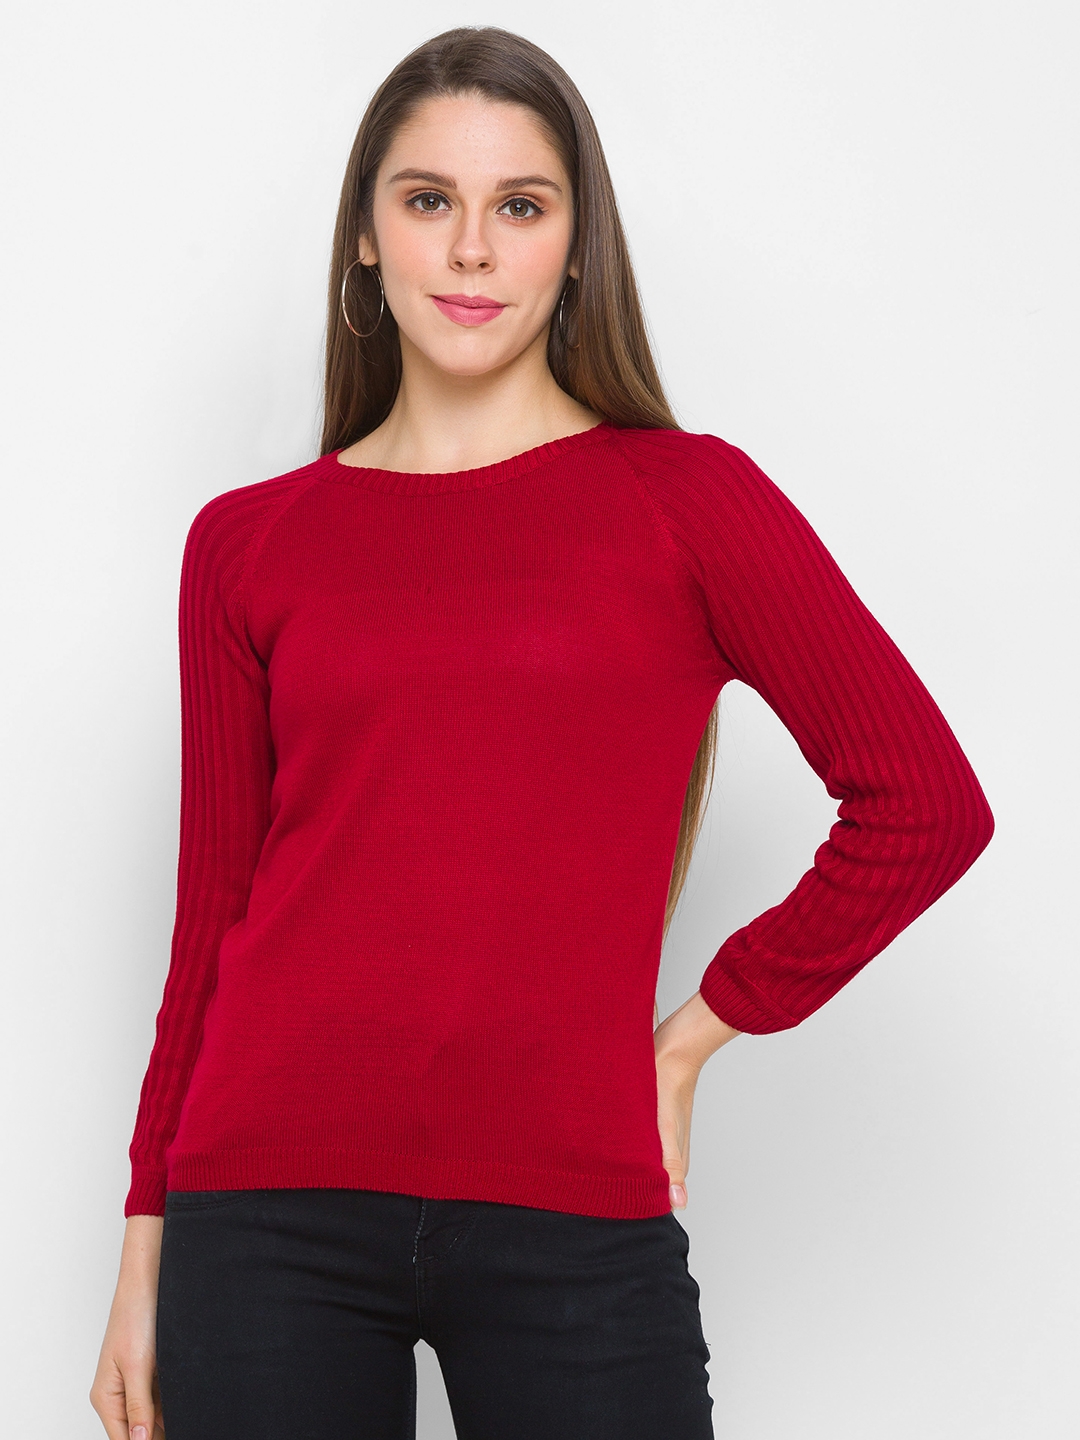 globus | Globus Solid Red Tshirt